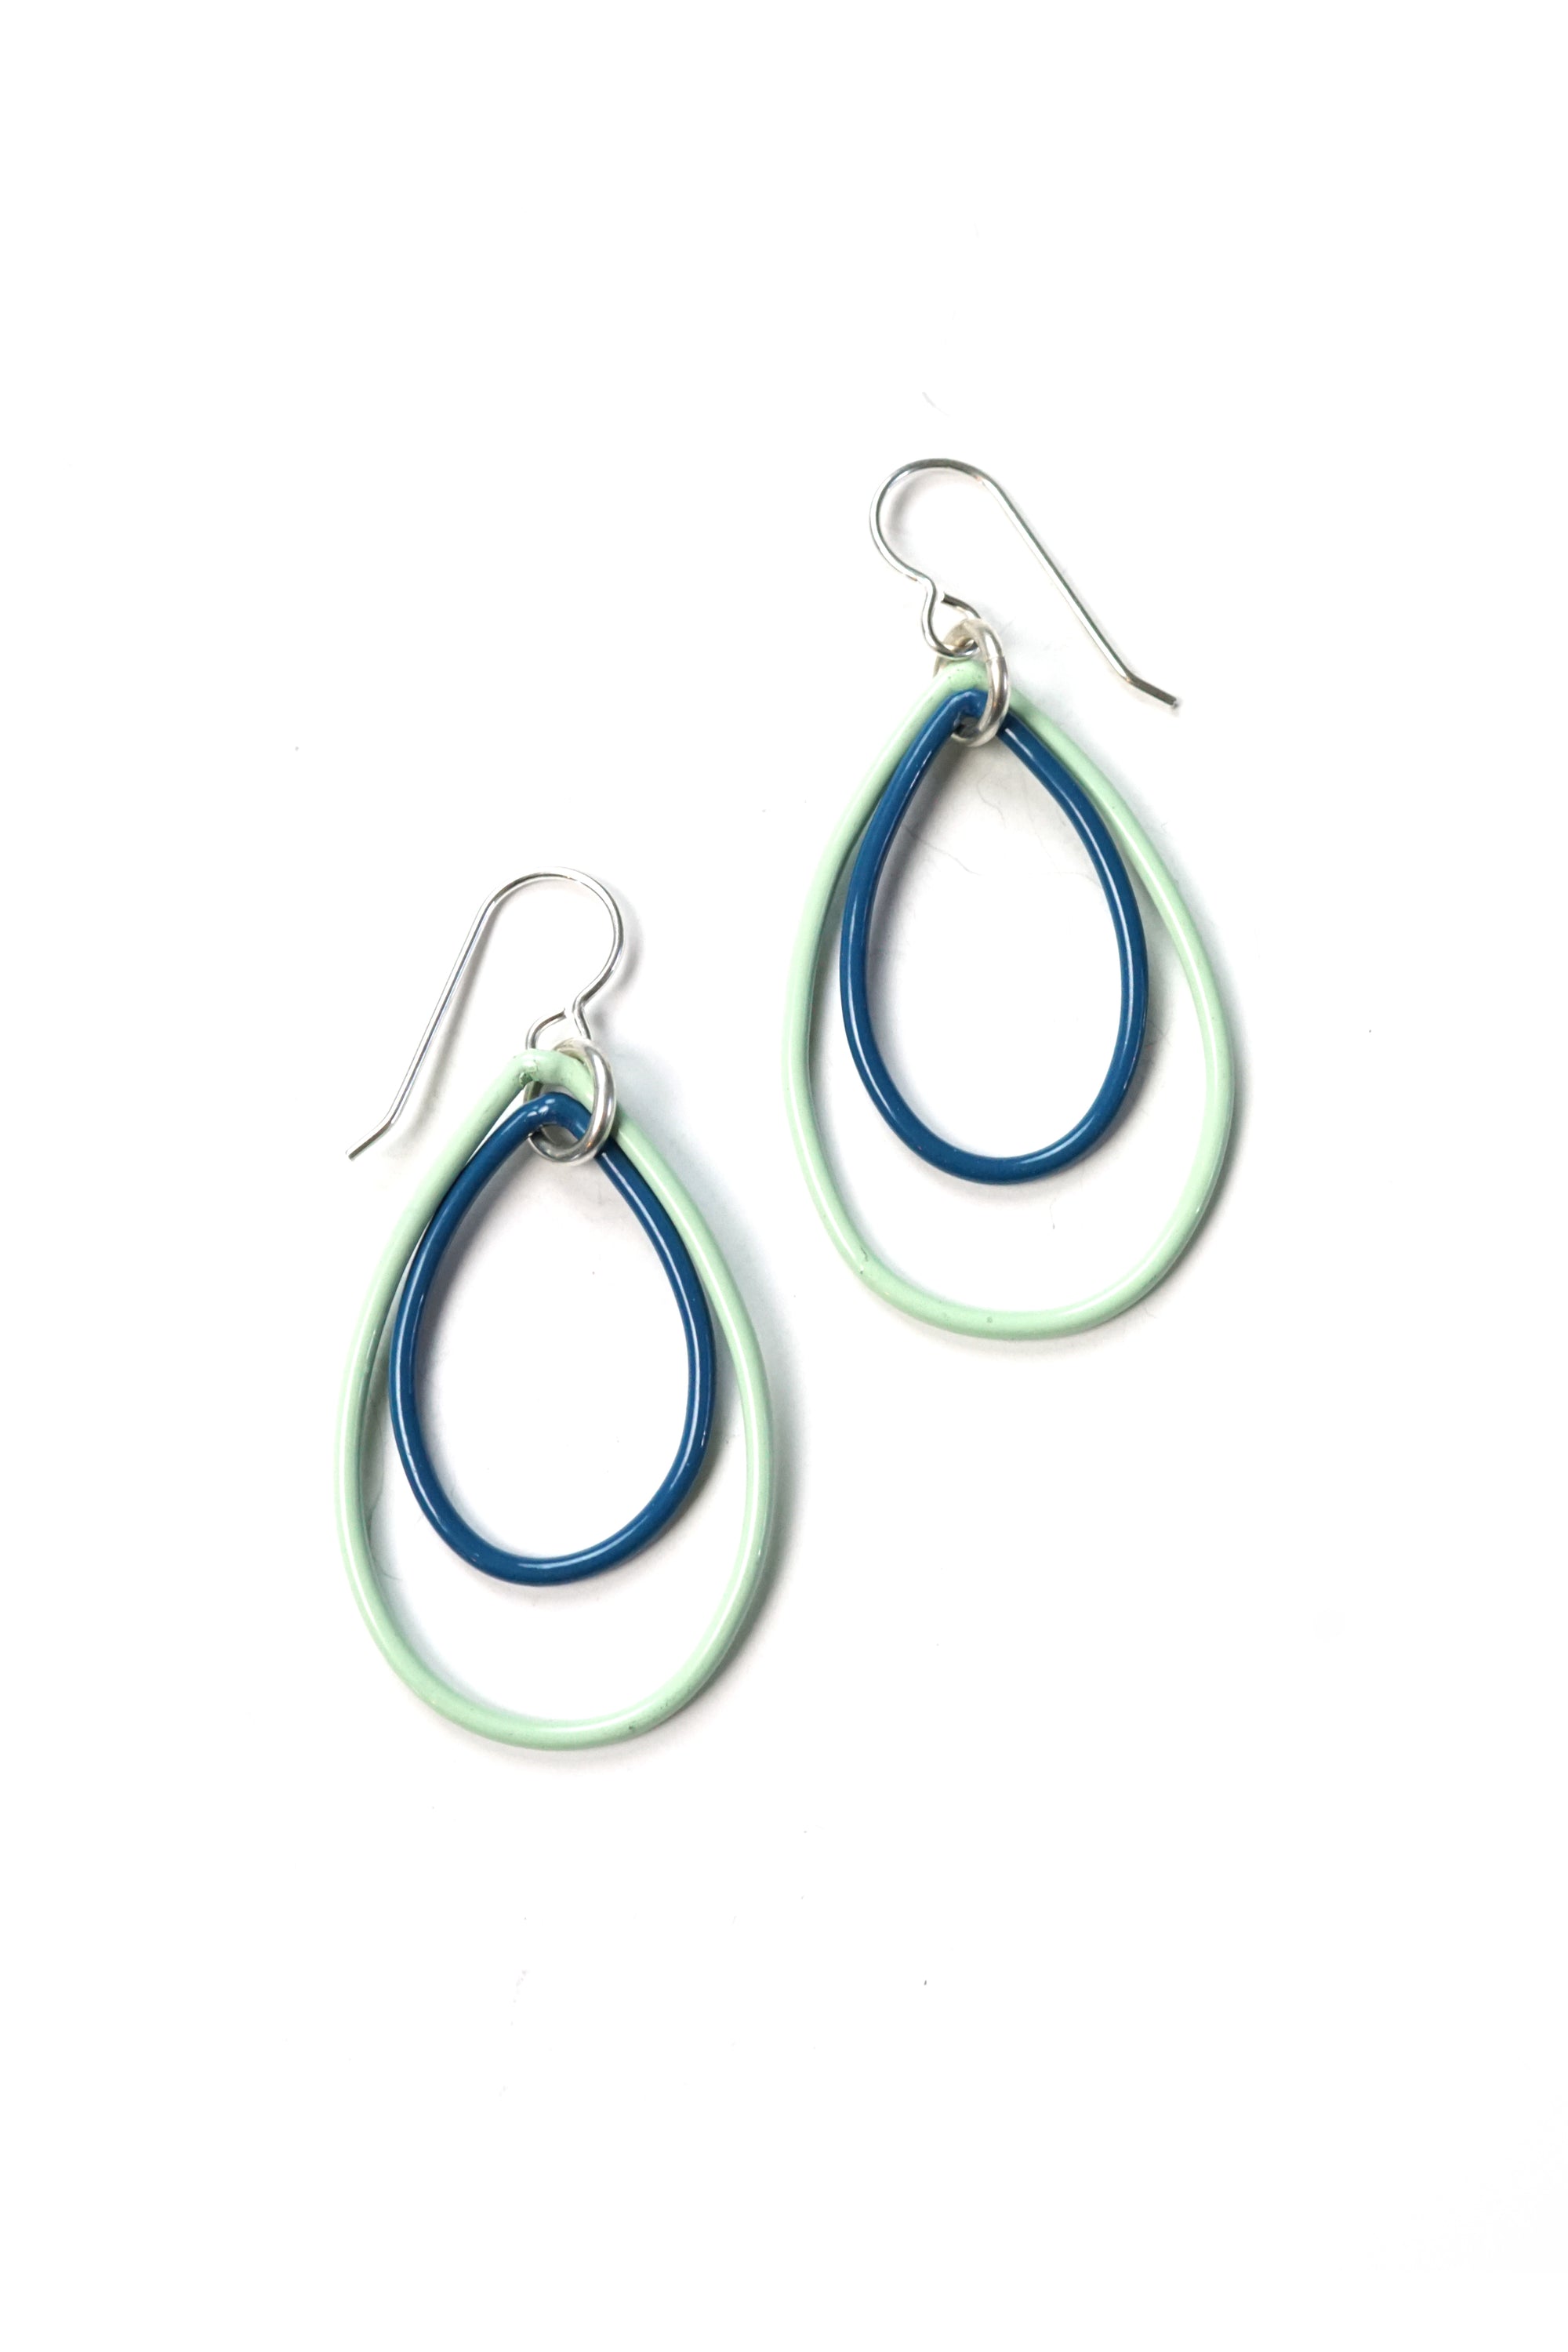 Ella earrings in Soft Mint and Azure Blue